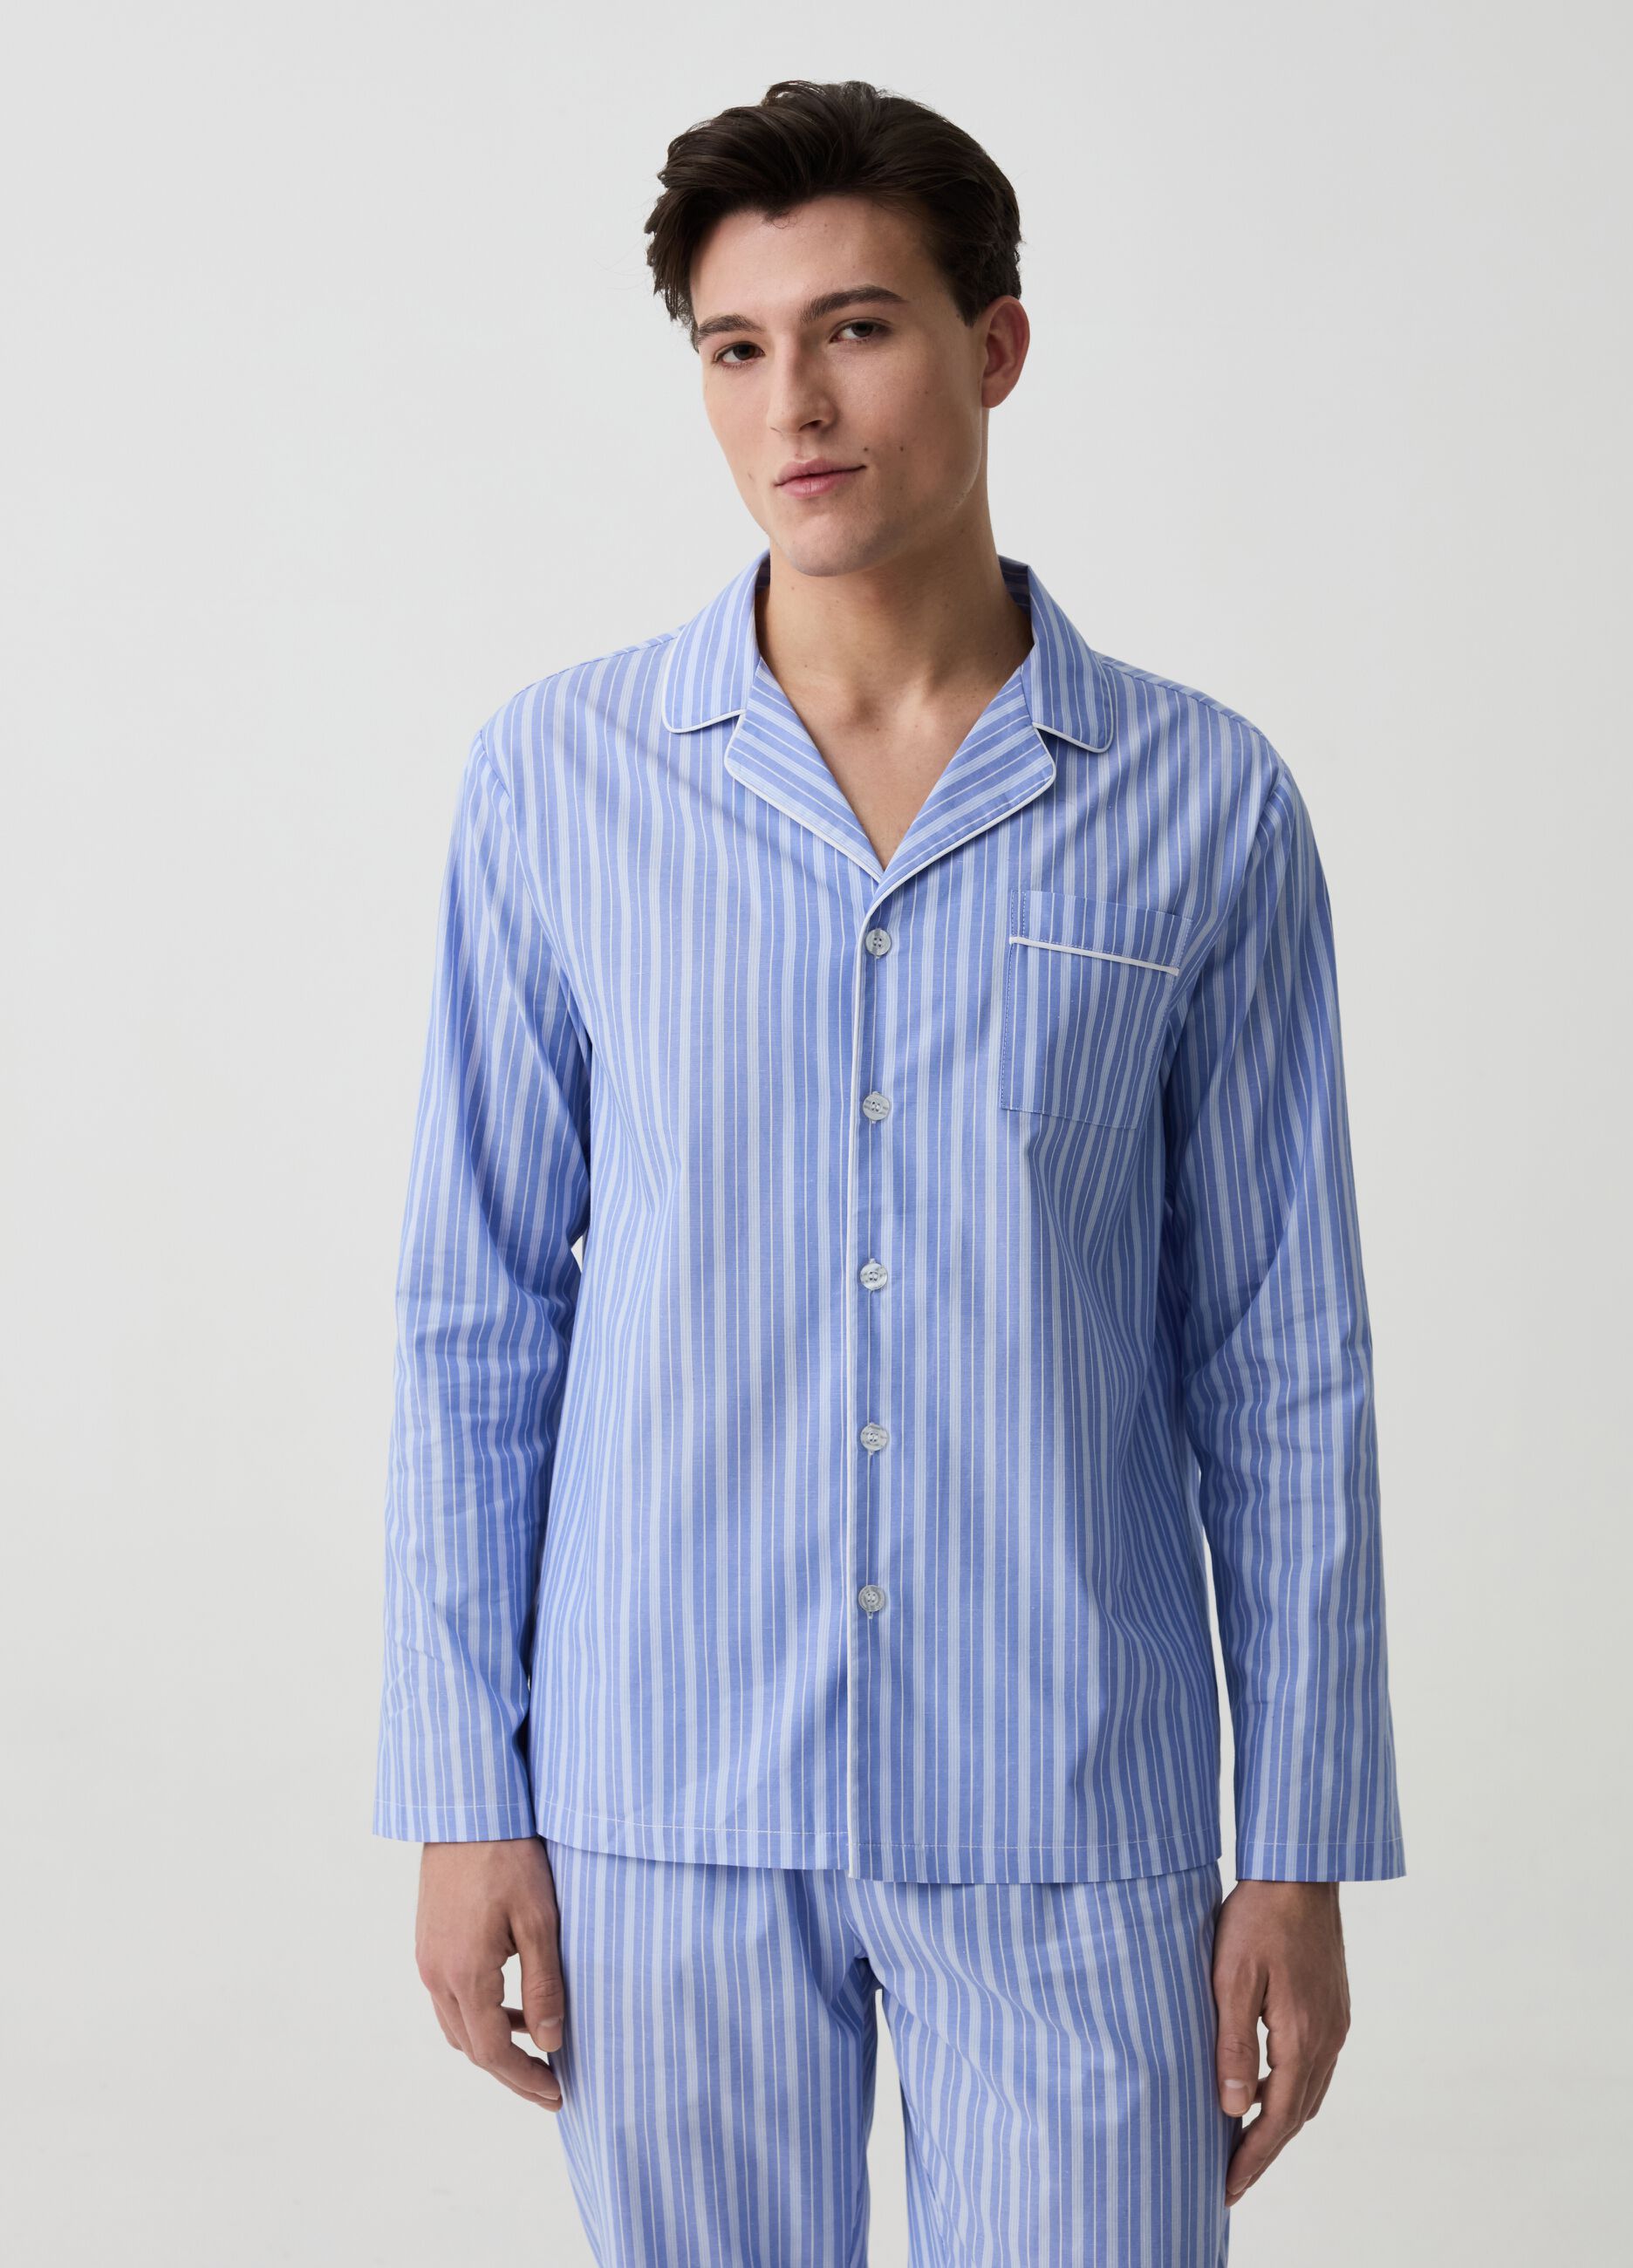 Long cotton pyjamas with buttons